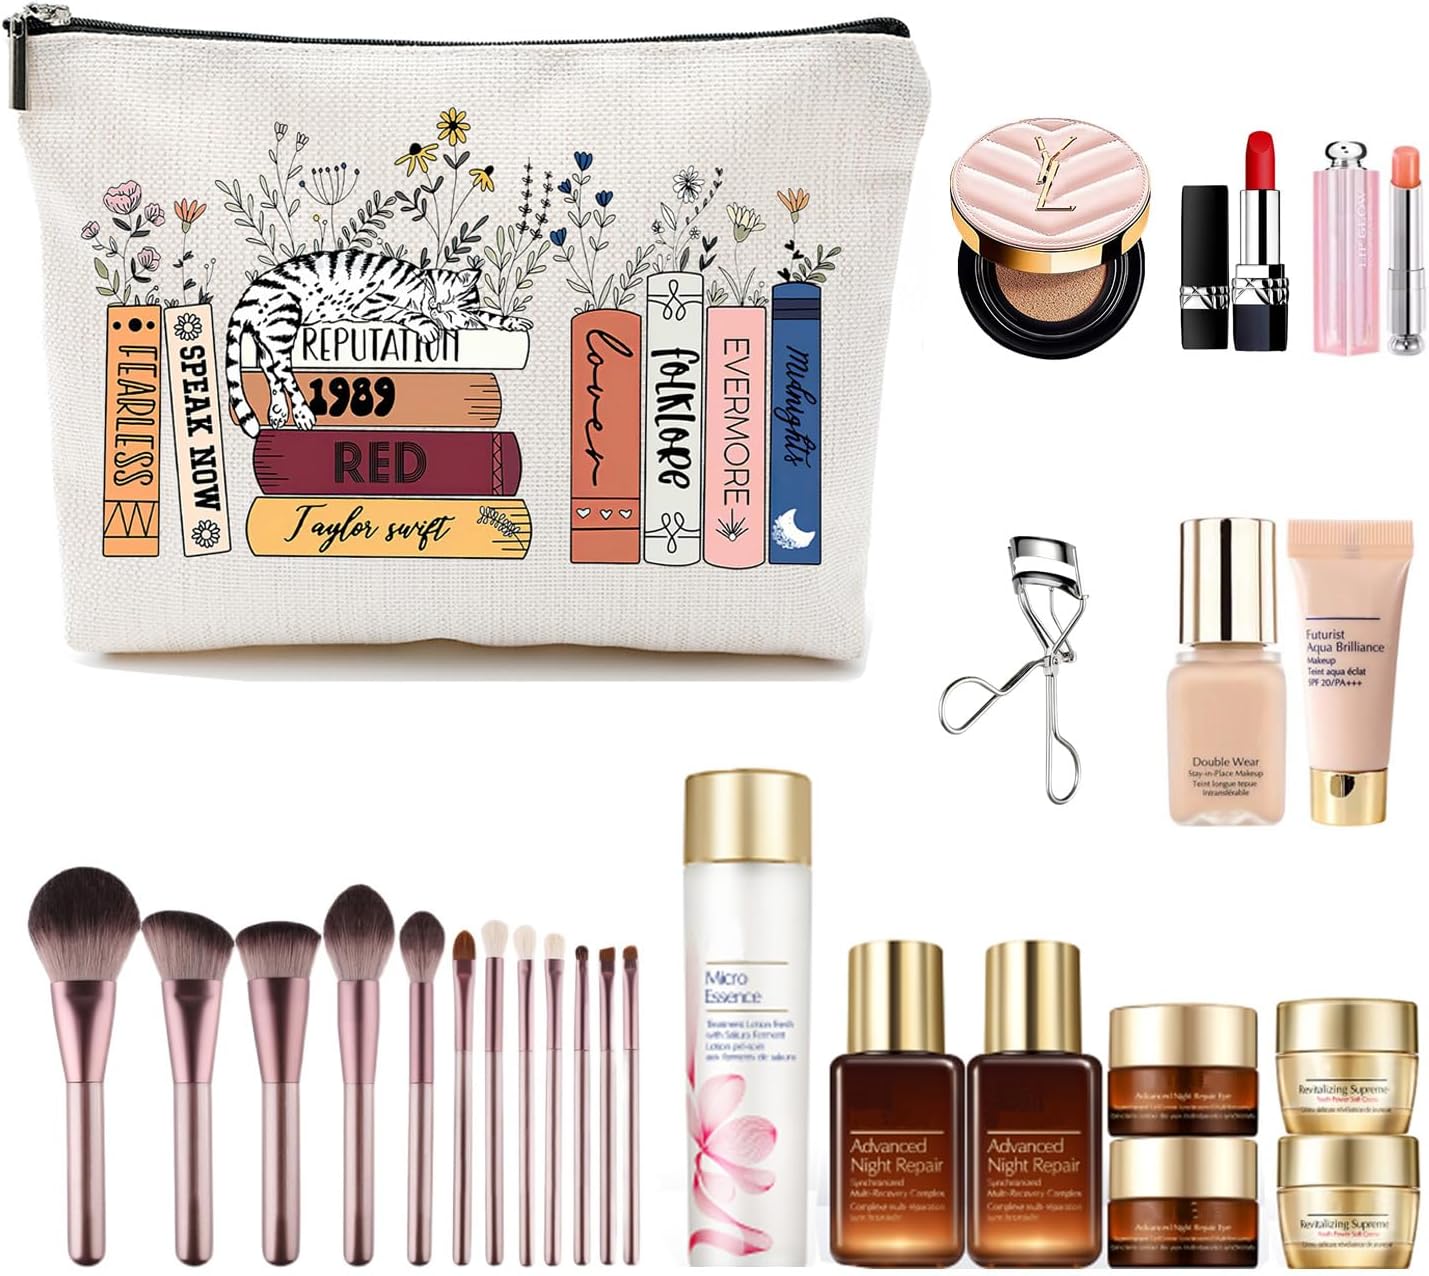 Swiftie Makeup Bag - Makeup Bag Taylor Swift For Fan Gifts - The Eras Tour Makeup Bag - Personalized The Era's Tour Cosmetic Bag -  Swiftie Bag